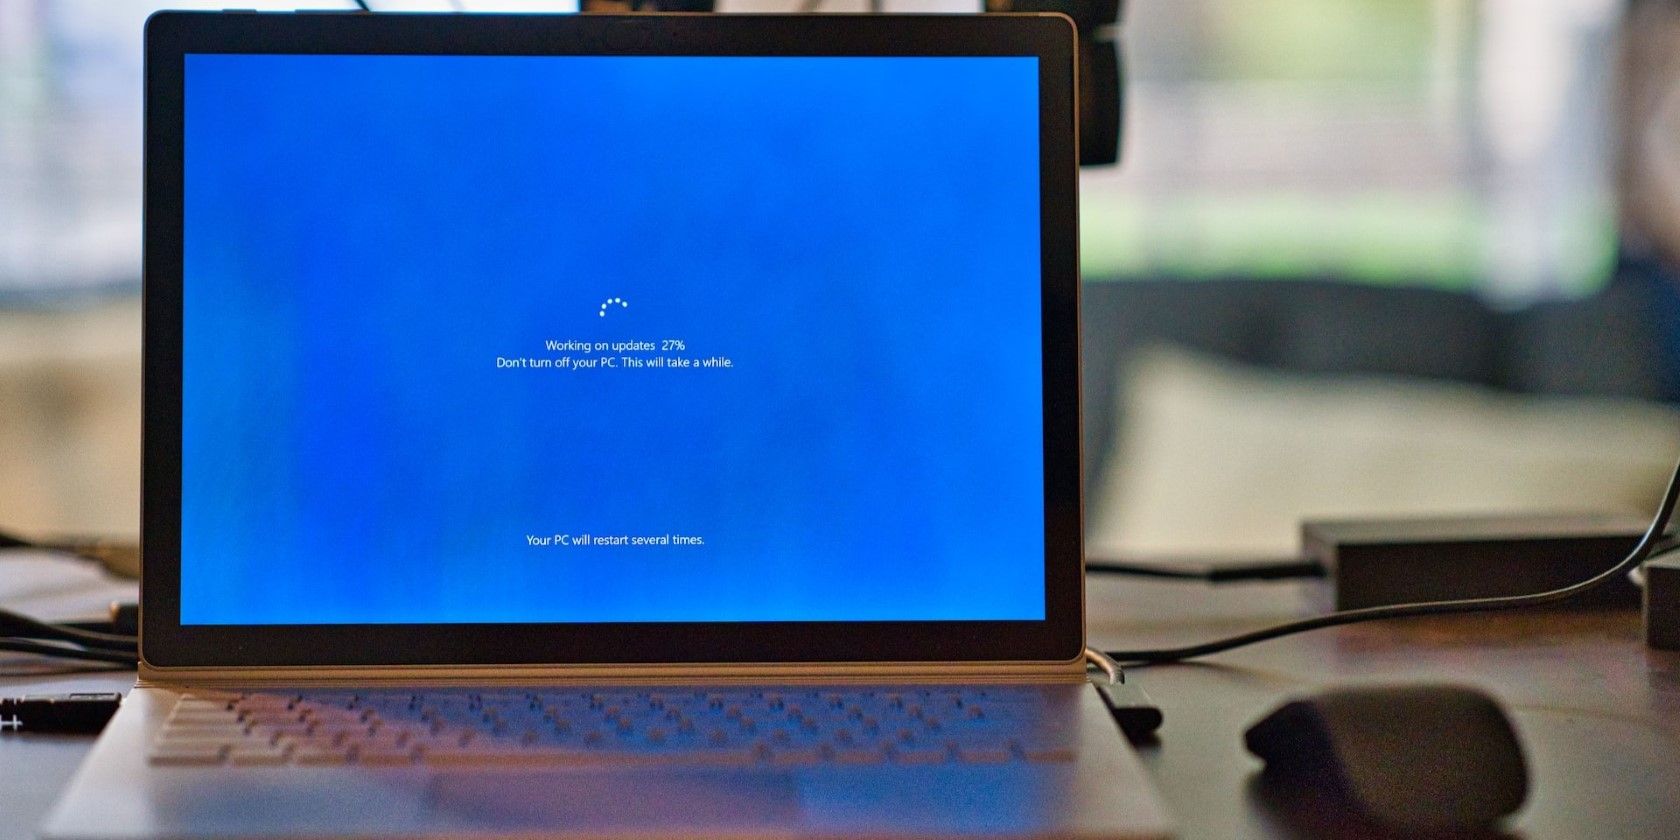 A Windows laptop installing updates